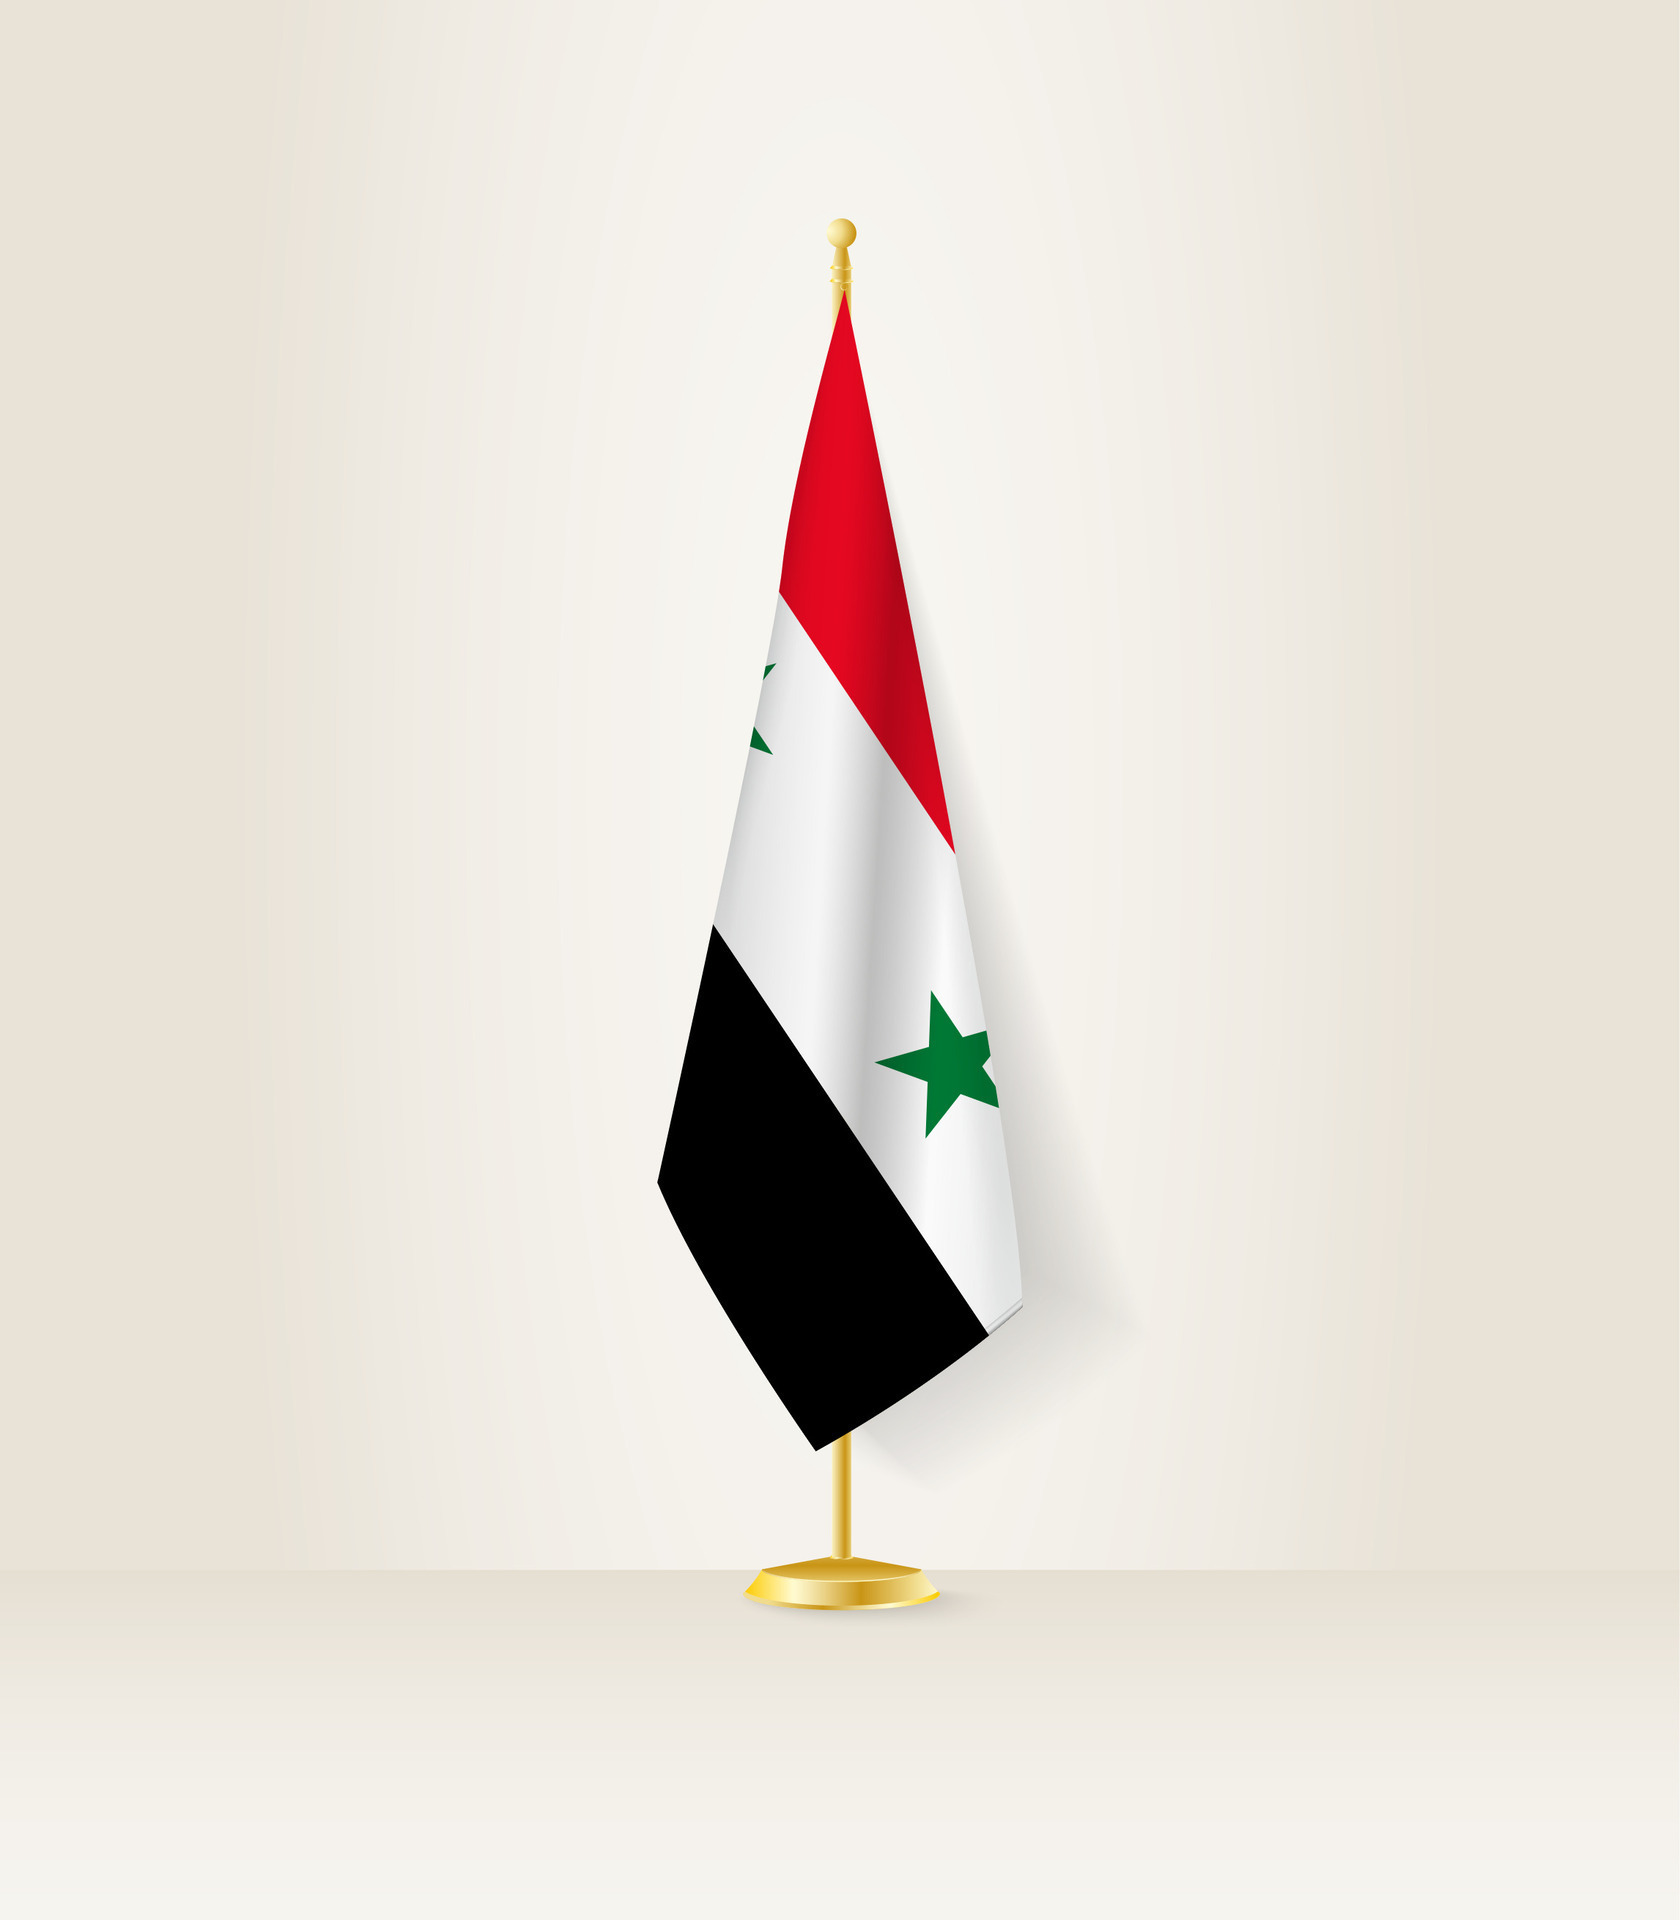 https://static.vecteezy.com/ti/gratis-vektor/p3/27288354-syrien-flagge-auf-ein-flagge-stand-vektor.jpg